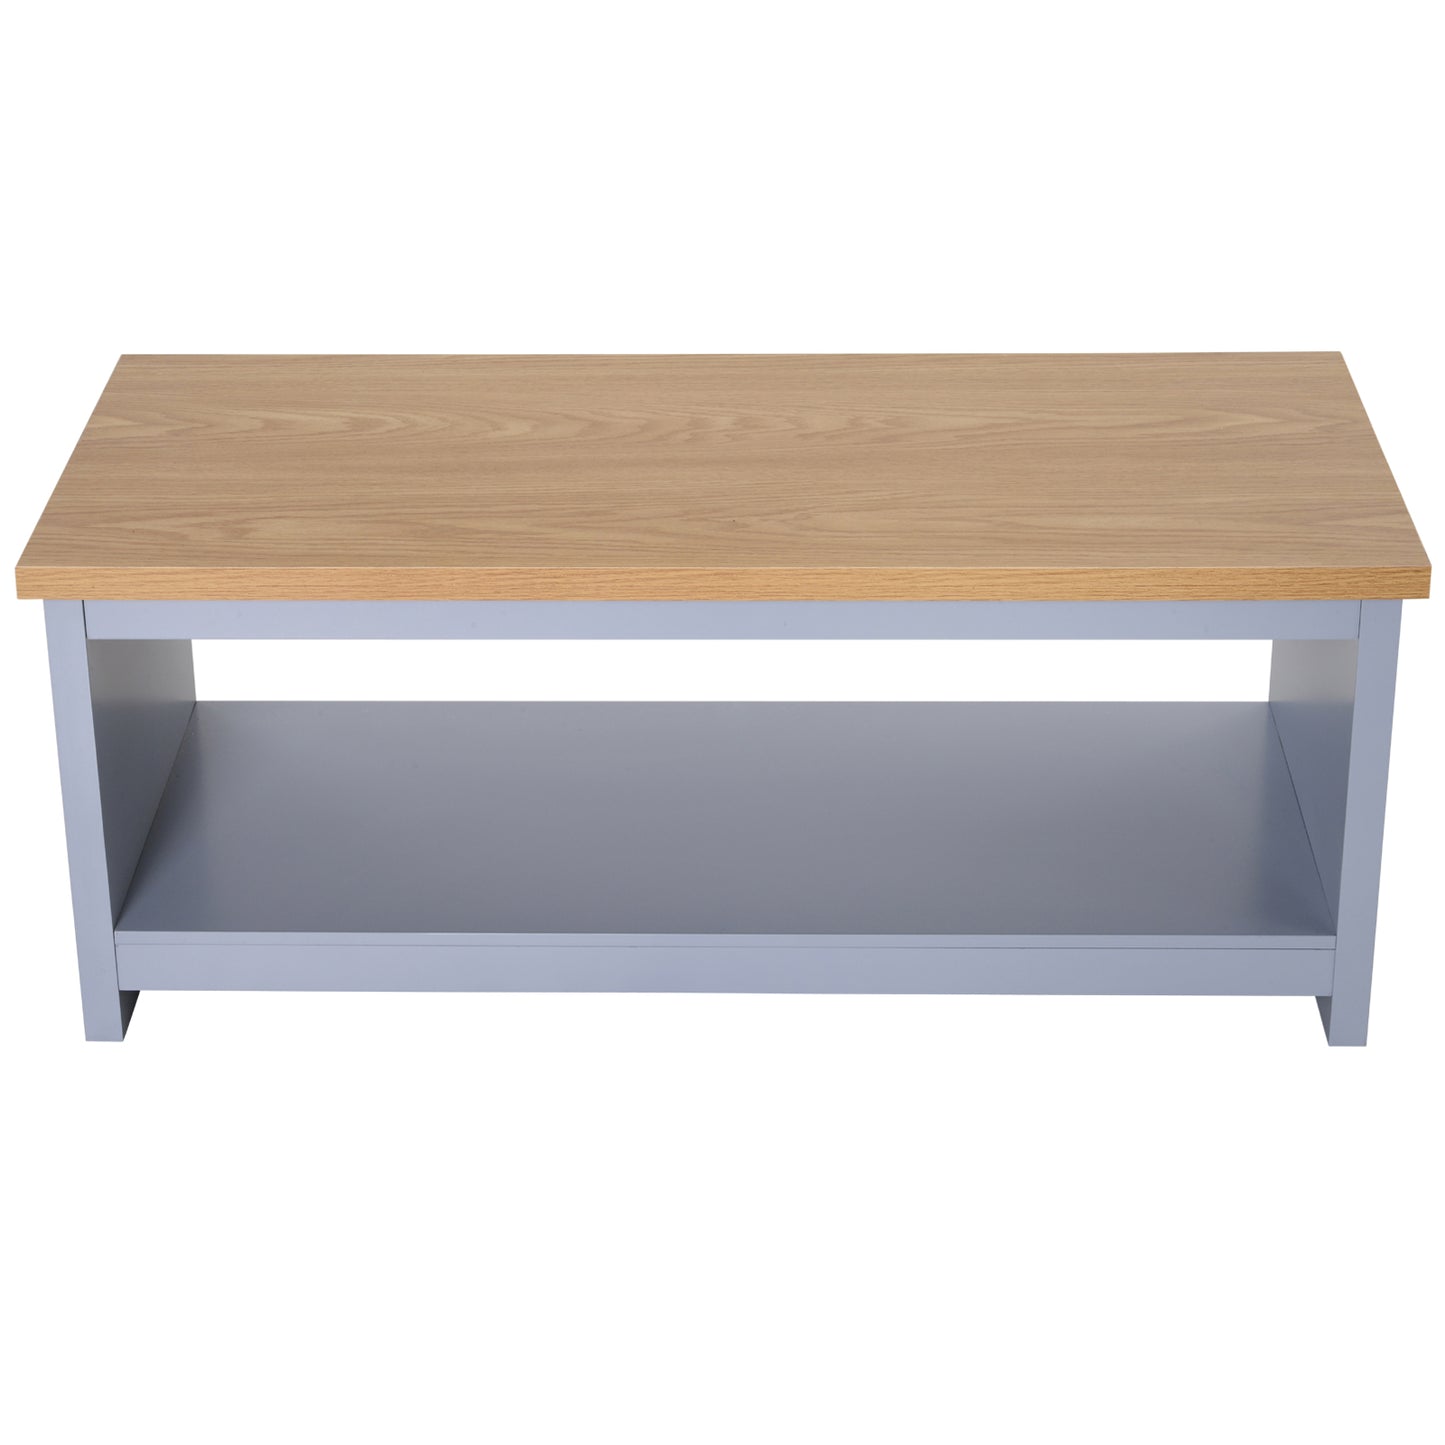 HOMCOM Coffee Table w/Open Display Wood Effect Tabletop Retro Rustic Style Chic Storage Grey